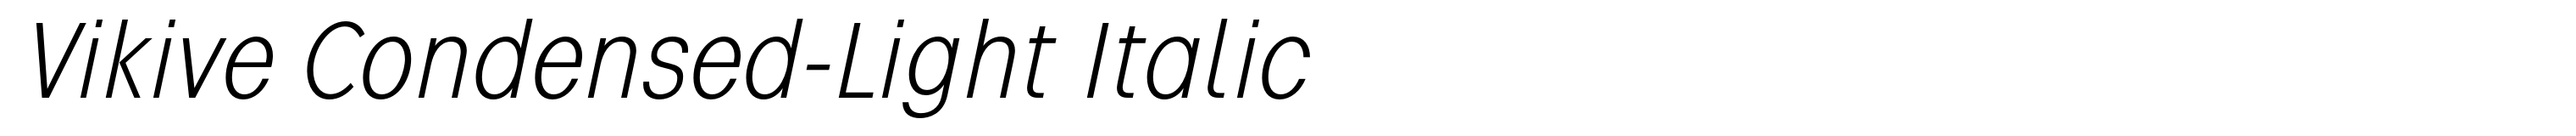 Vikive Condensed-Light Italic